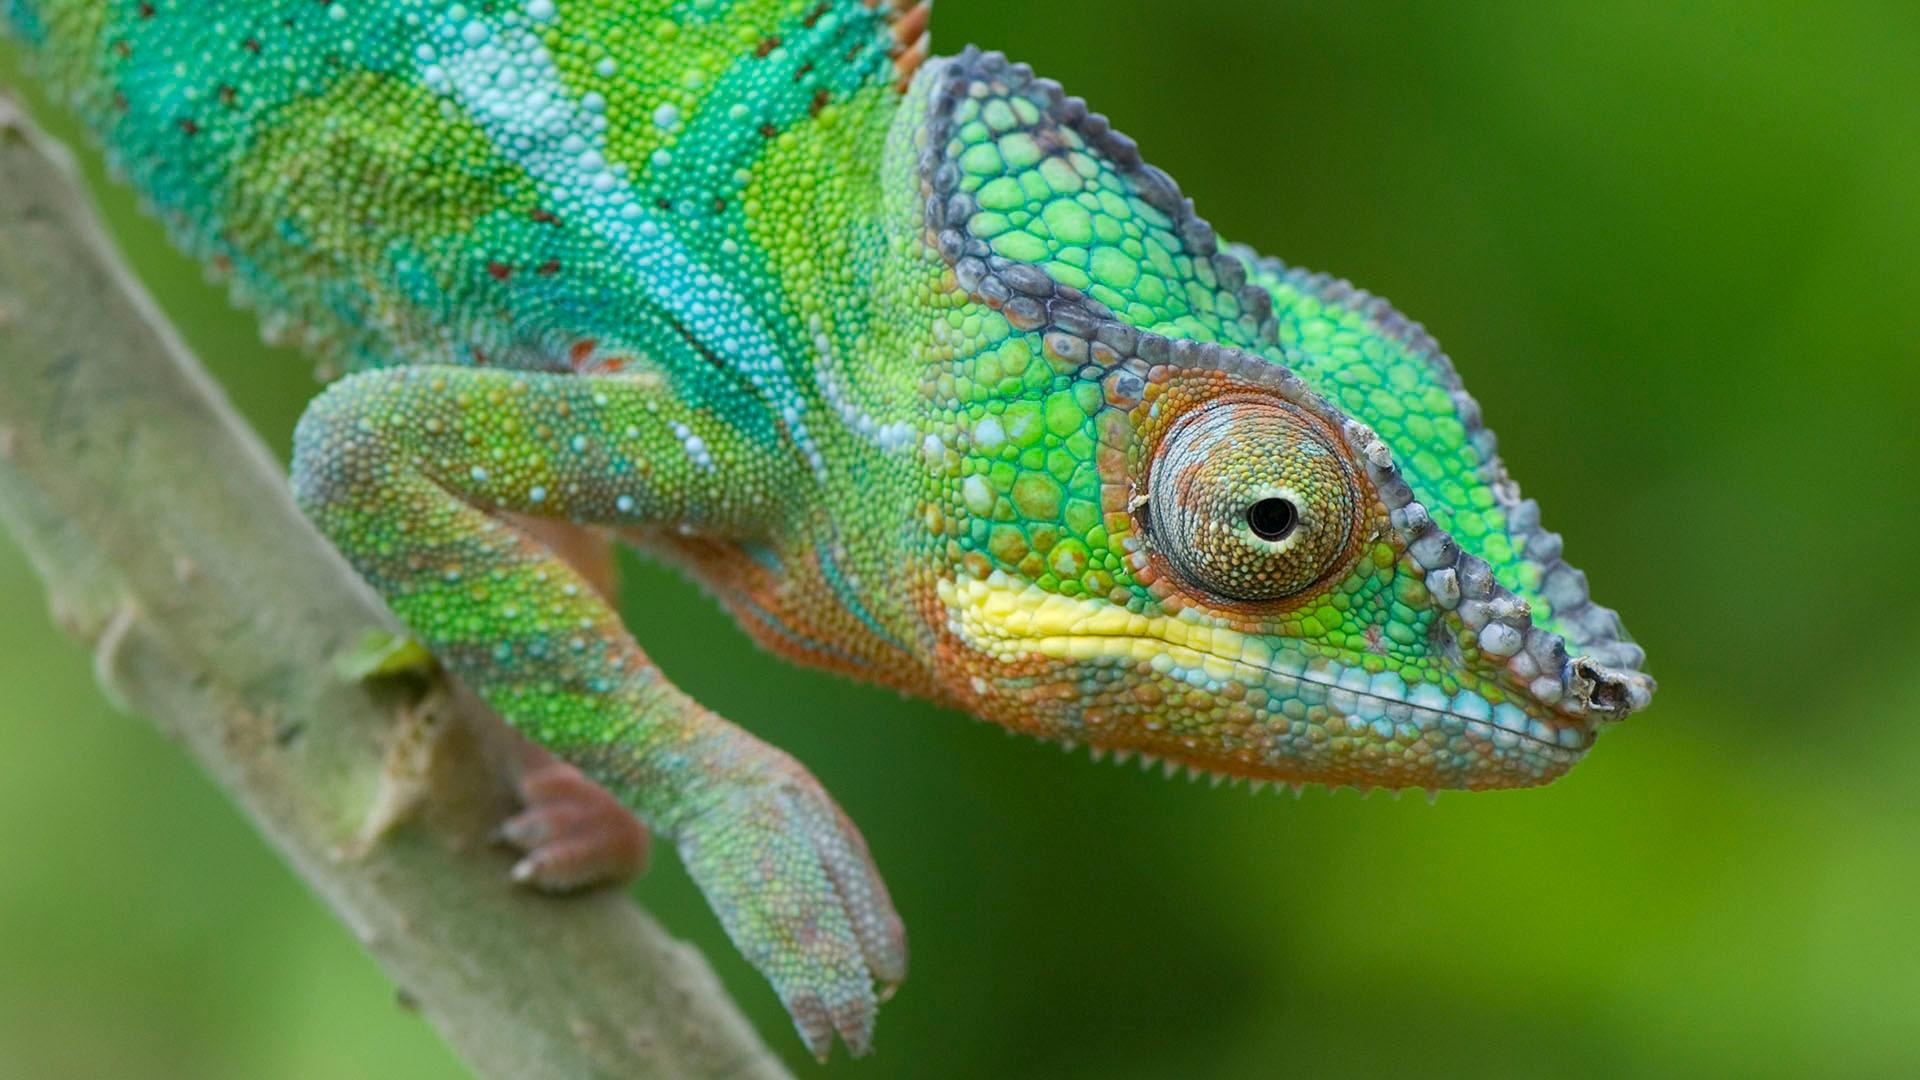 Closeup image of a panther chameleon.